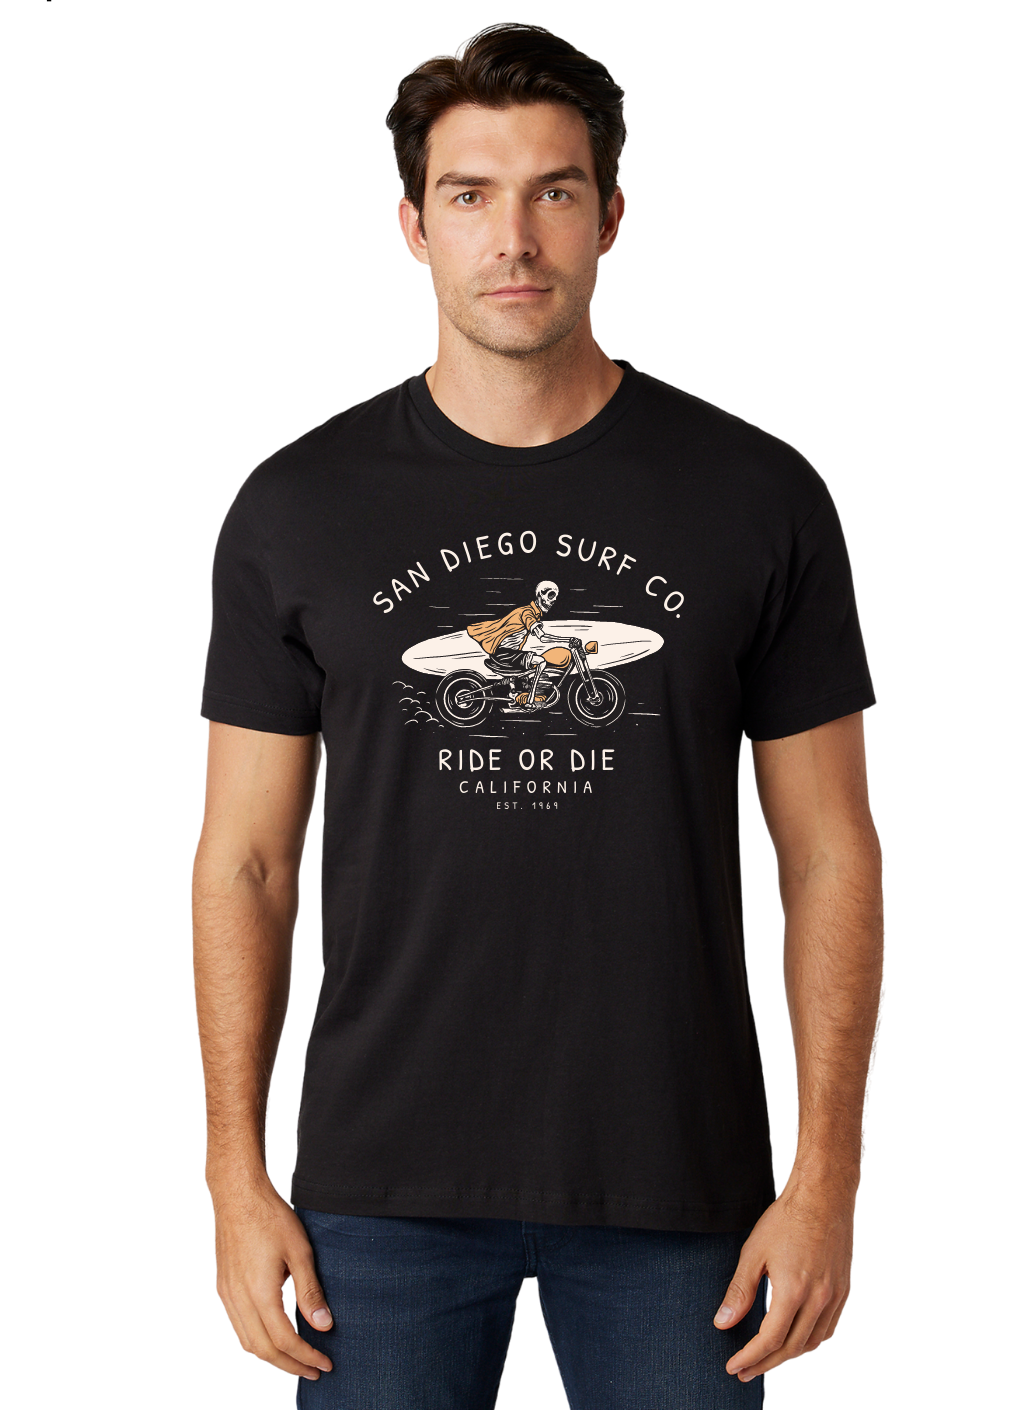 Ride or Die San Diego Surf Co T-shirt